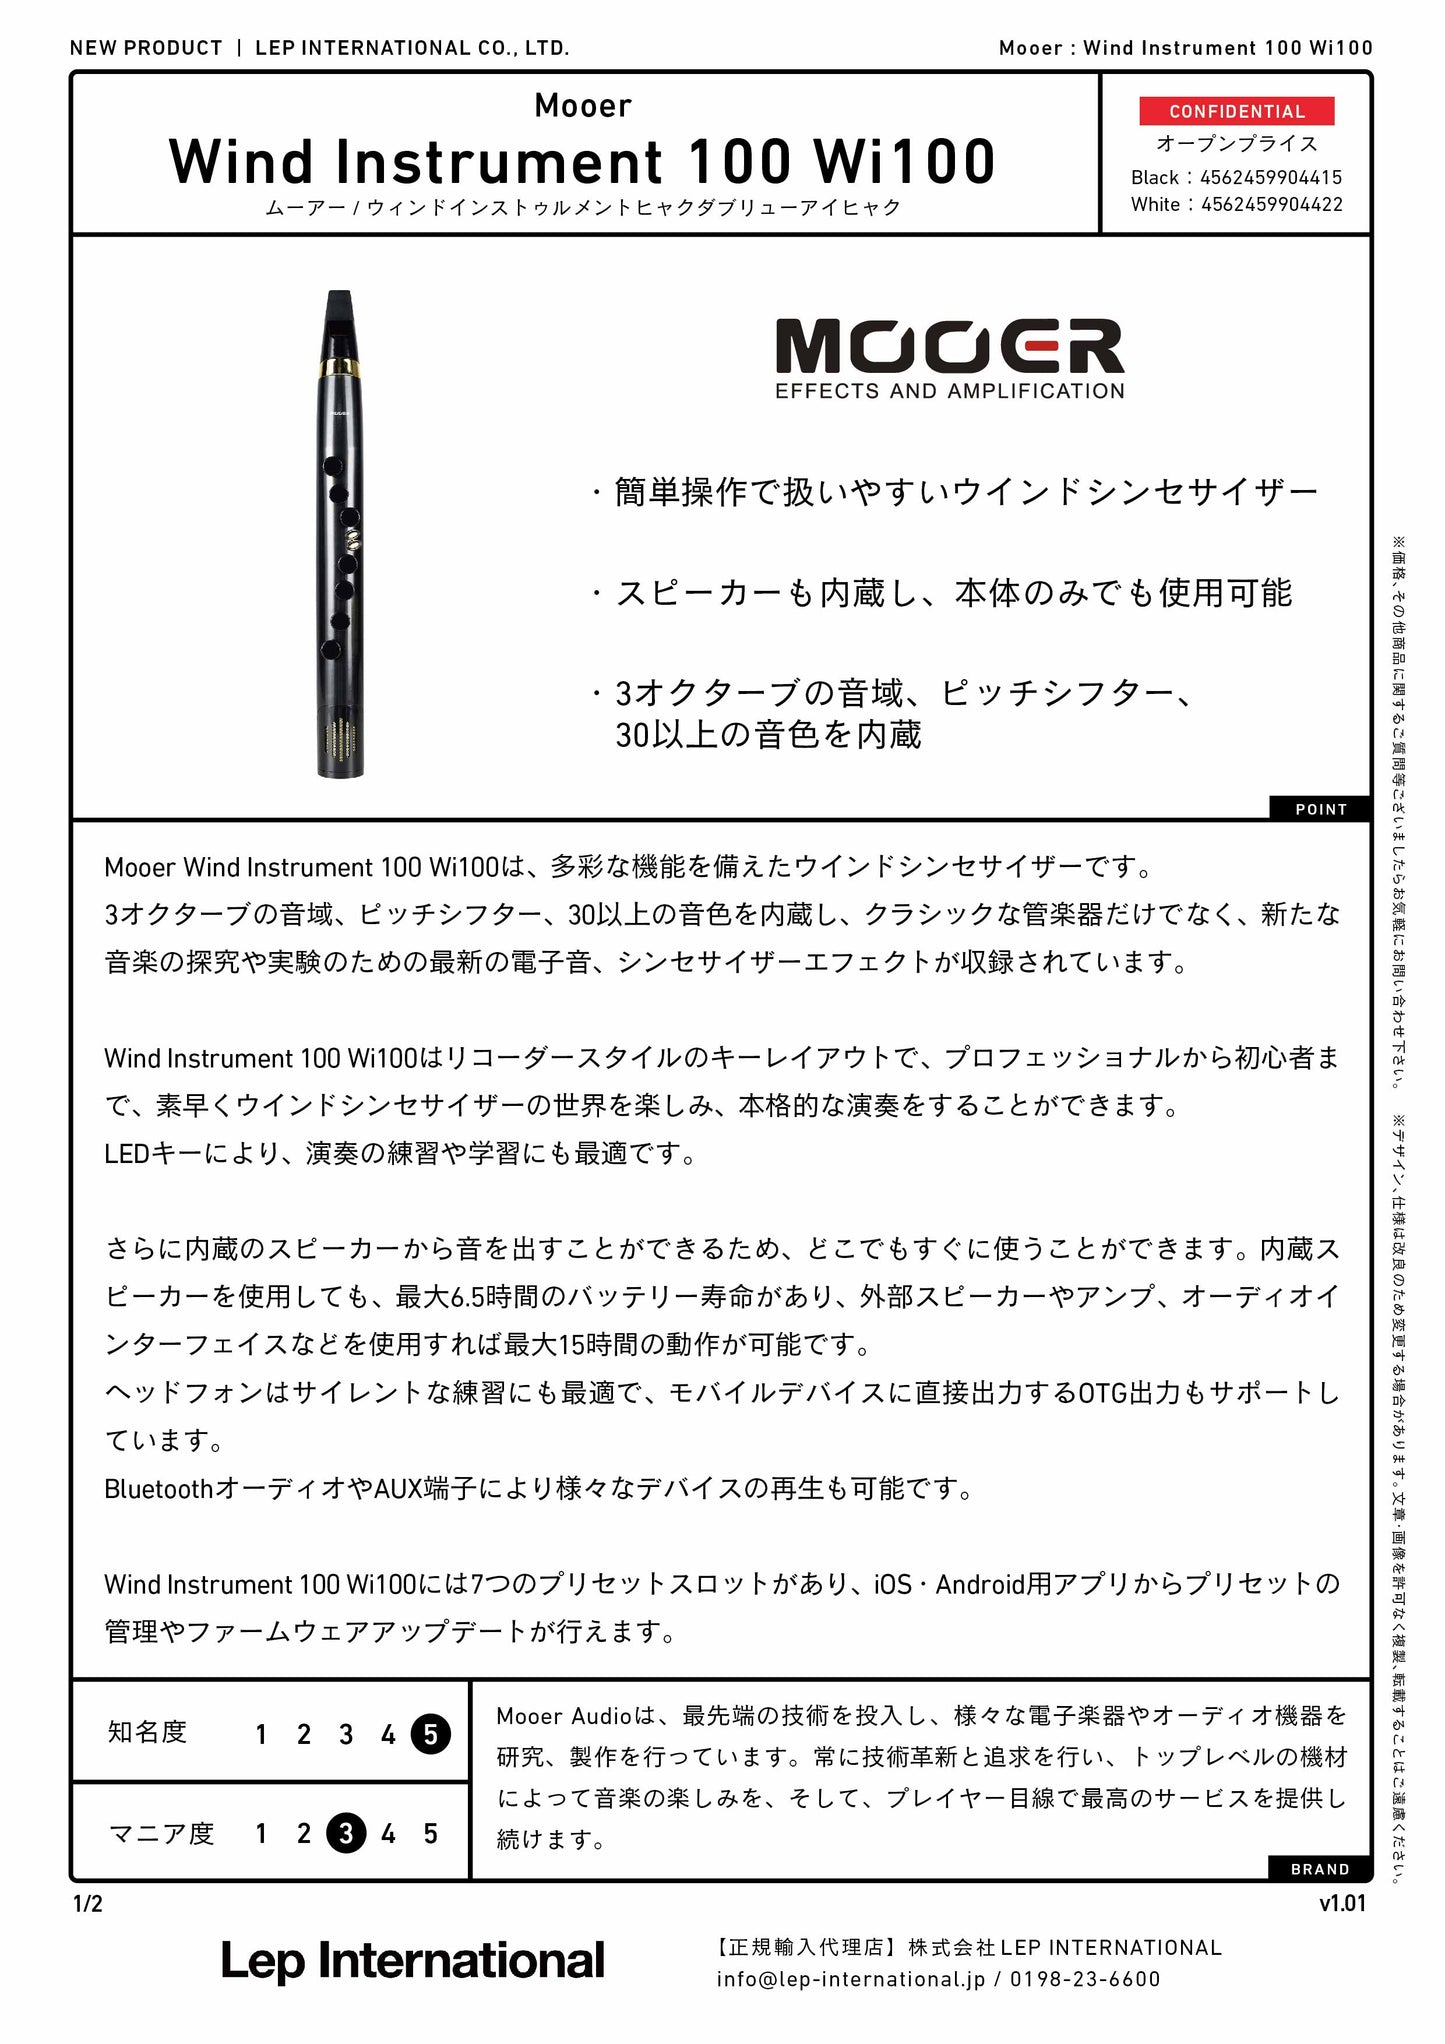 Mooer / Wind Instrument 100 Wi100